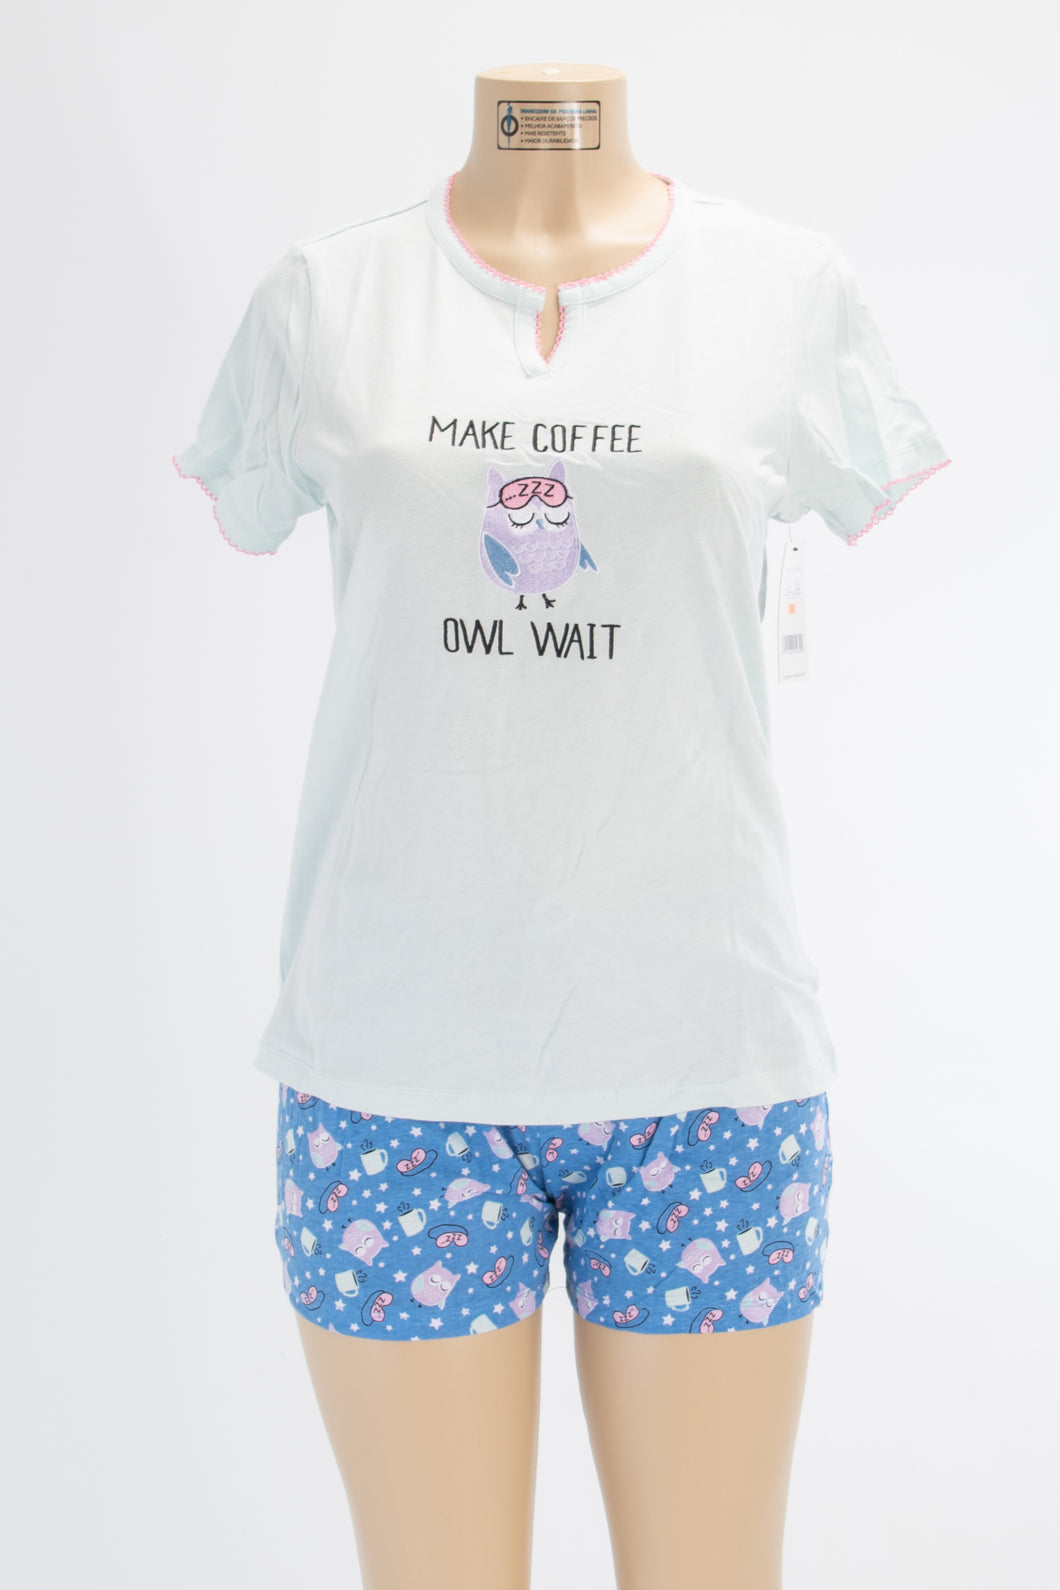 2 Piece “Make Coffee Owl Wait” Pajama Set